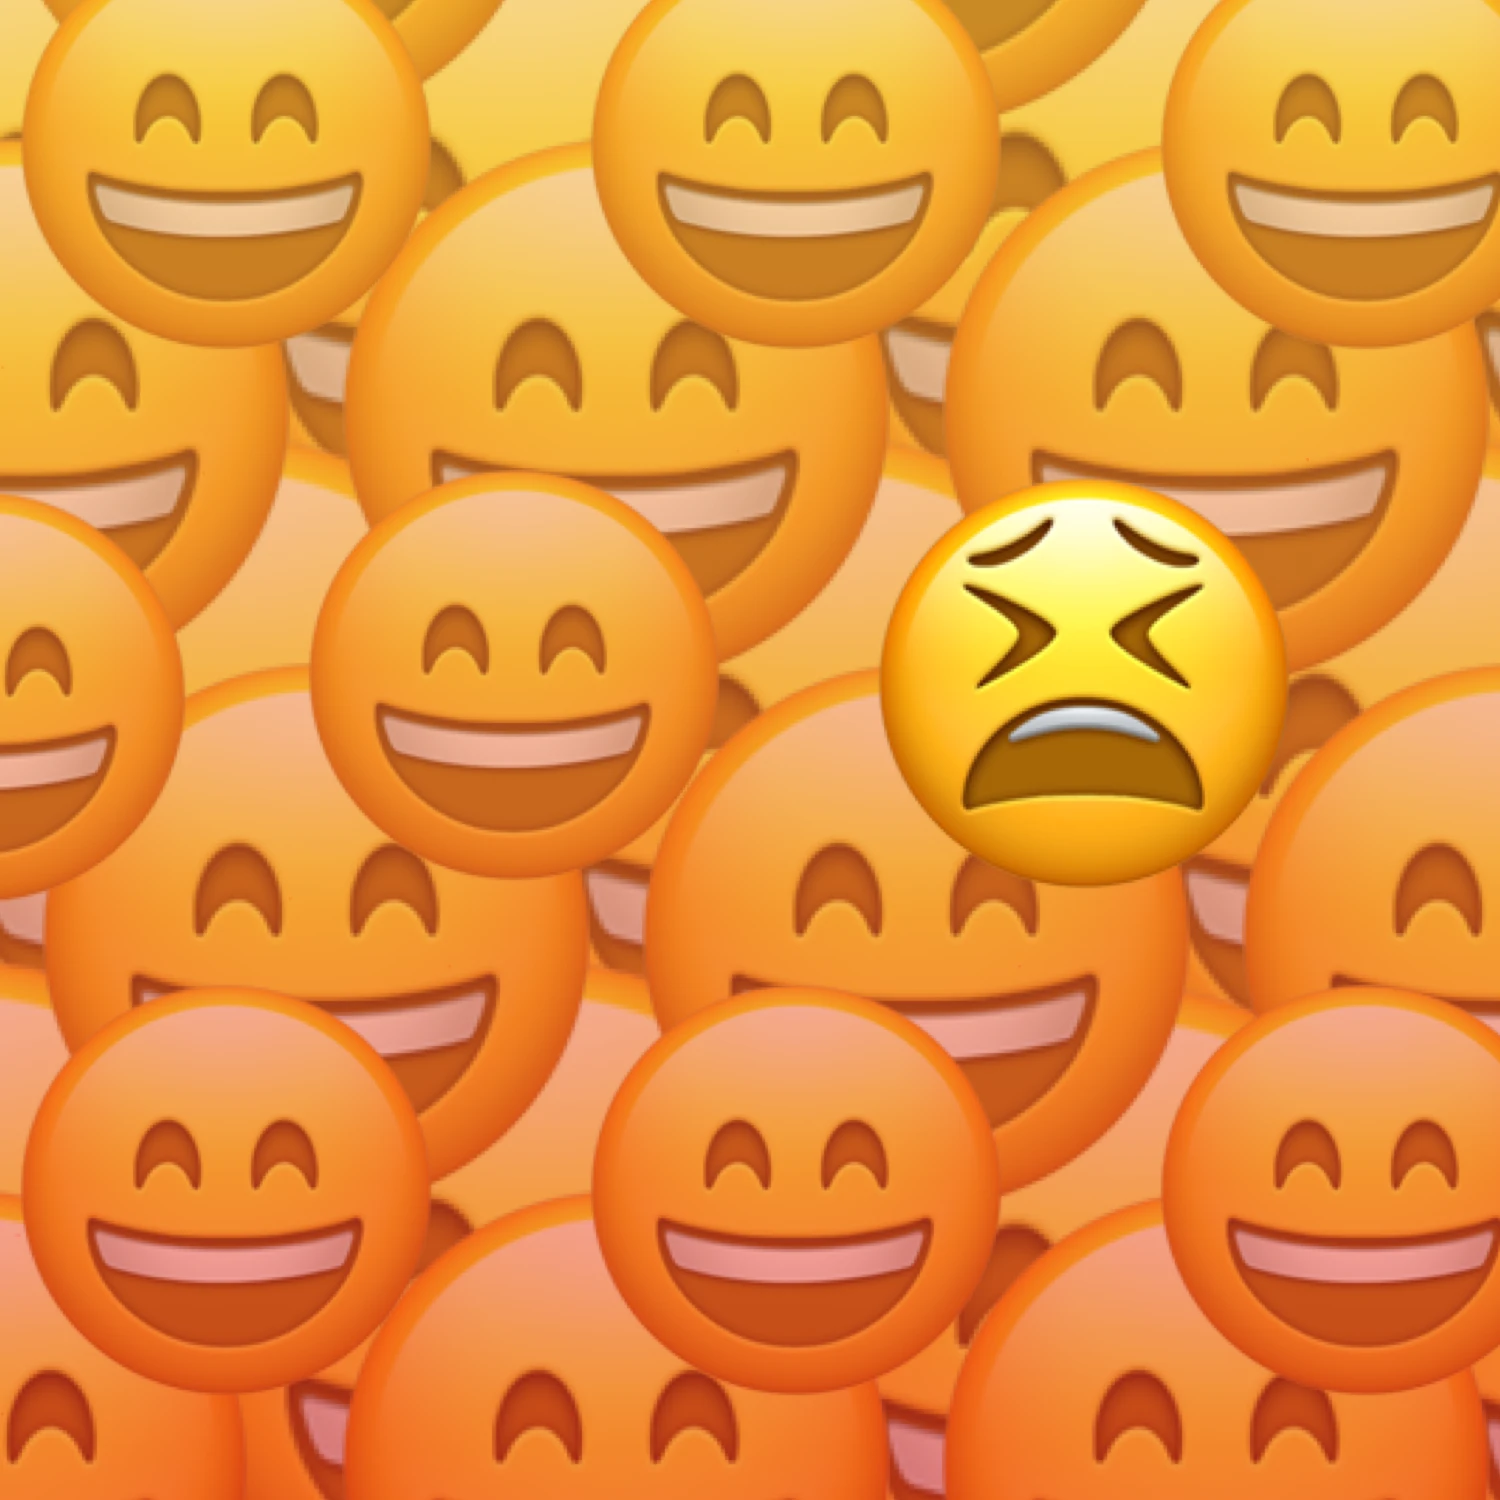 toxic-positivity-emojis